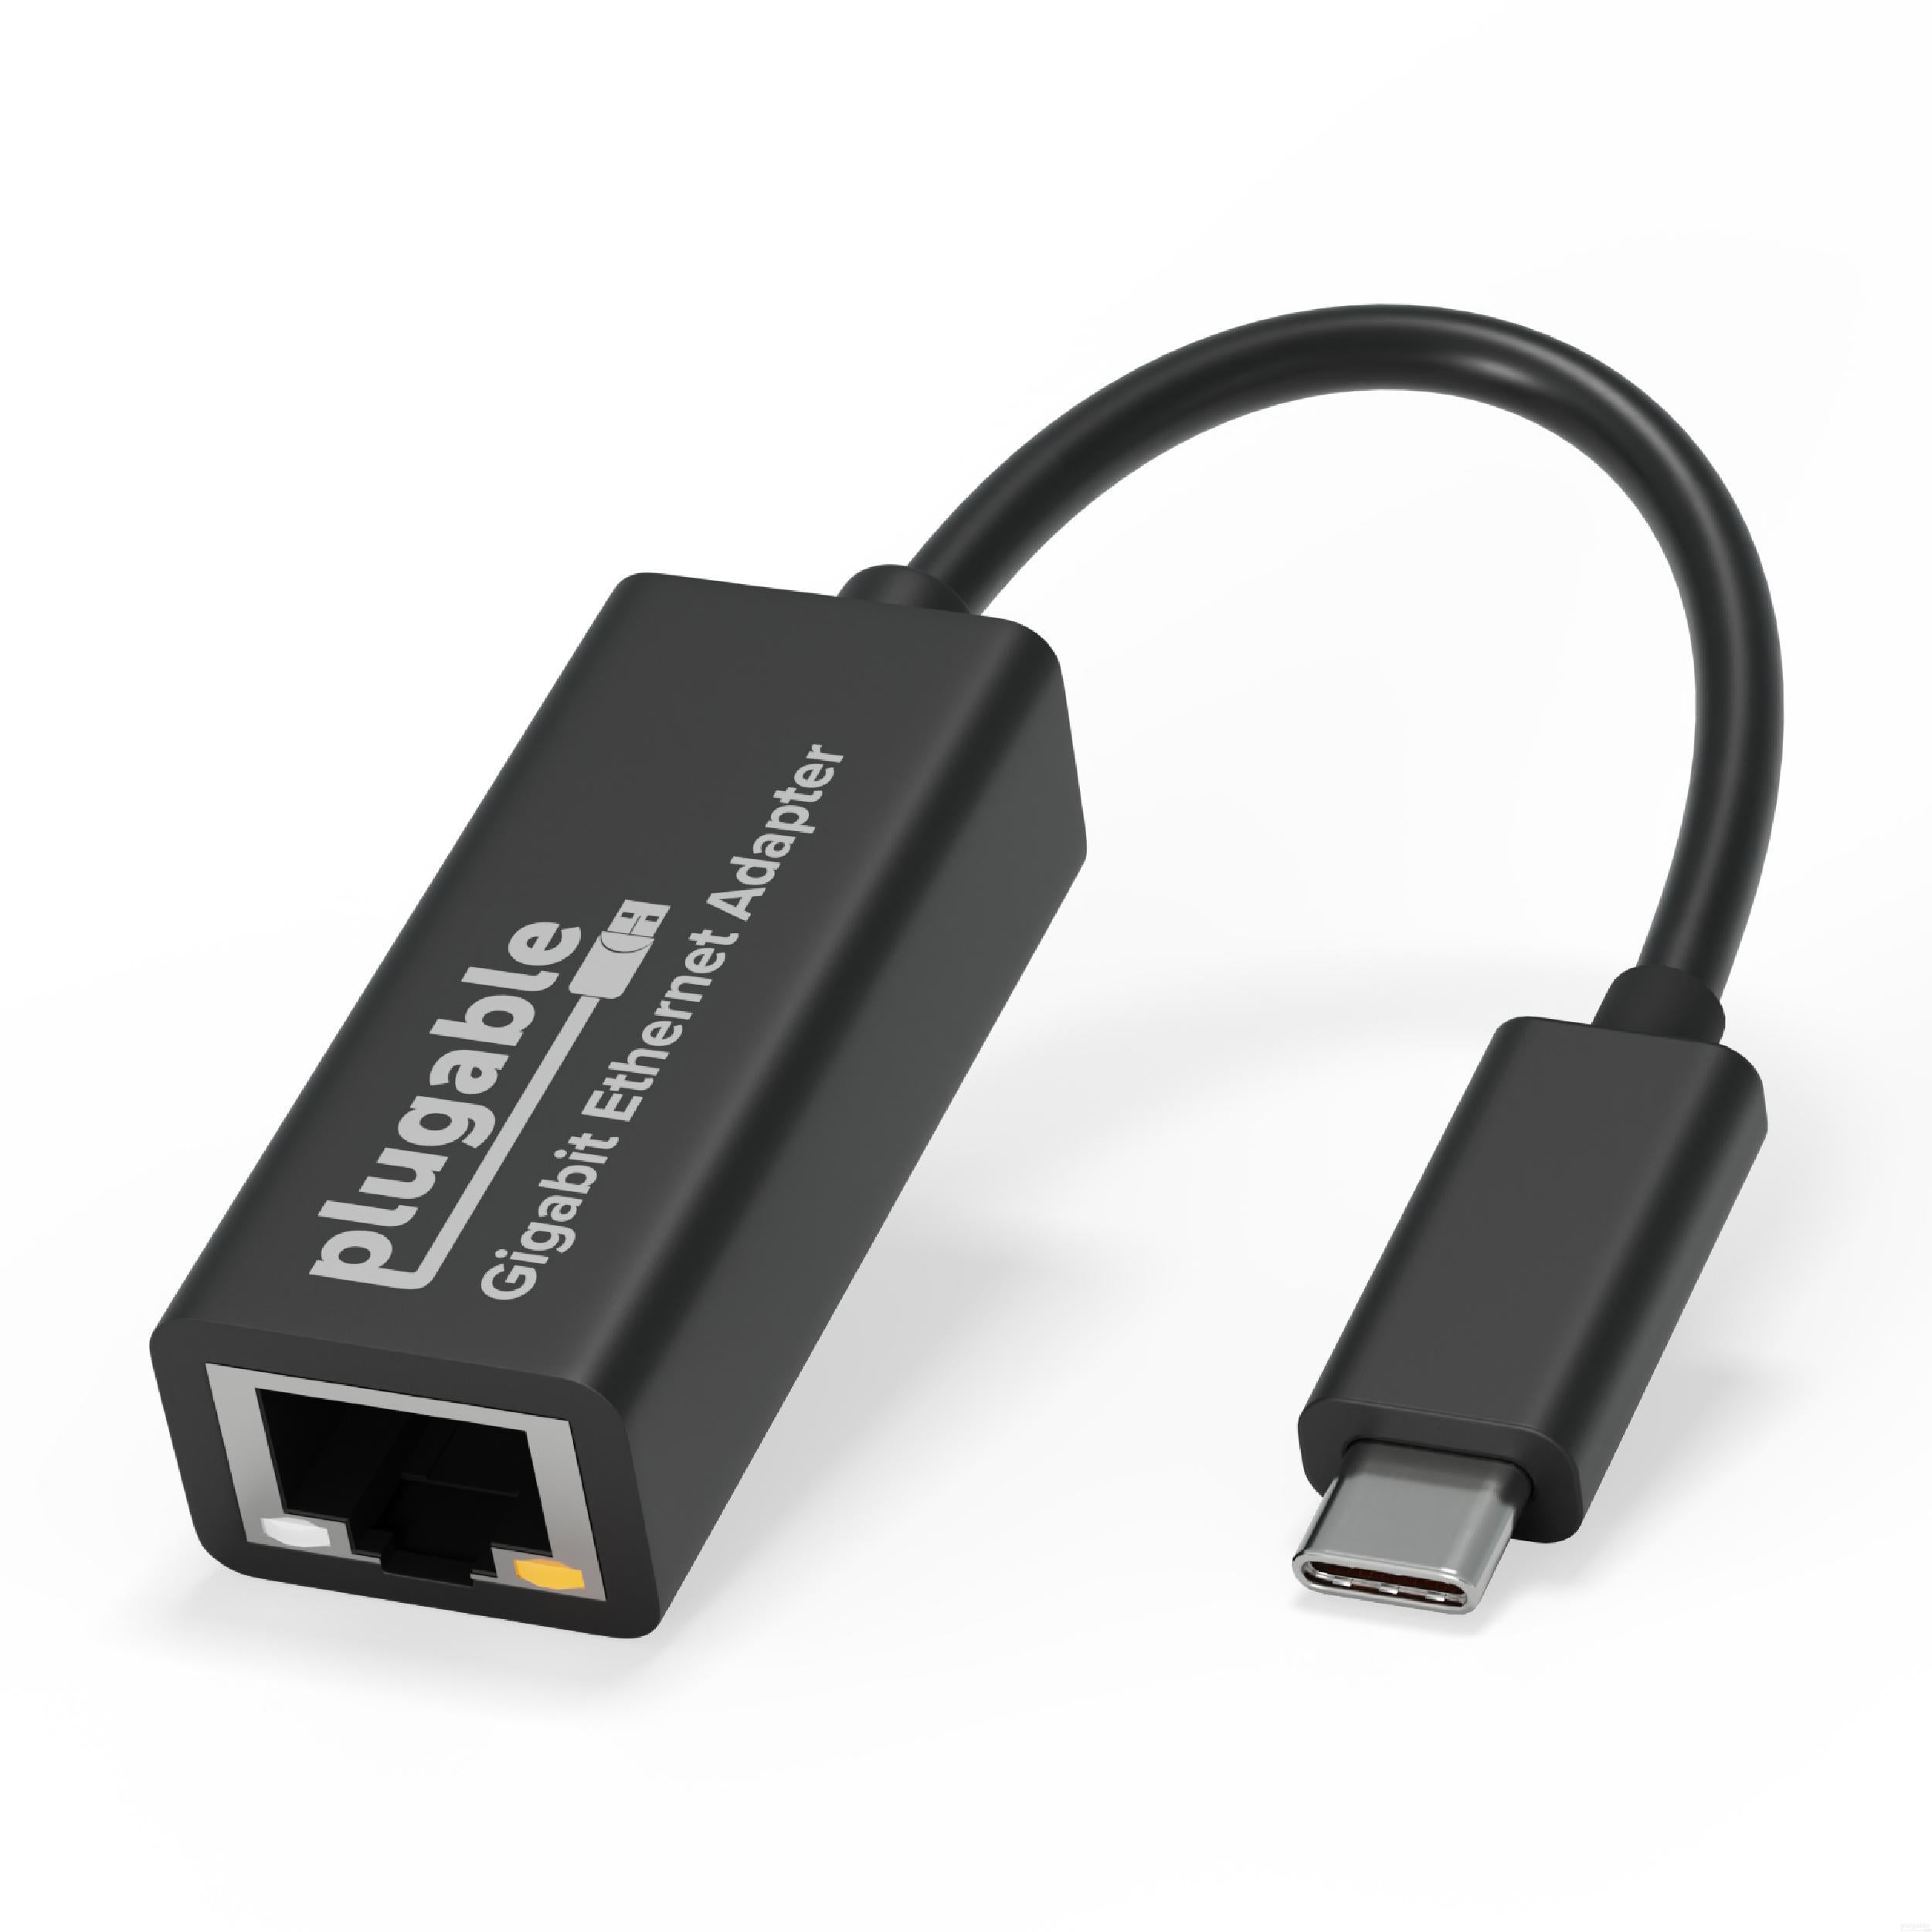 Plugable Gigabit Ethernet Adapter – Plugable Technologies